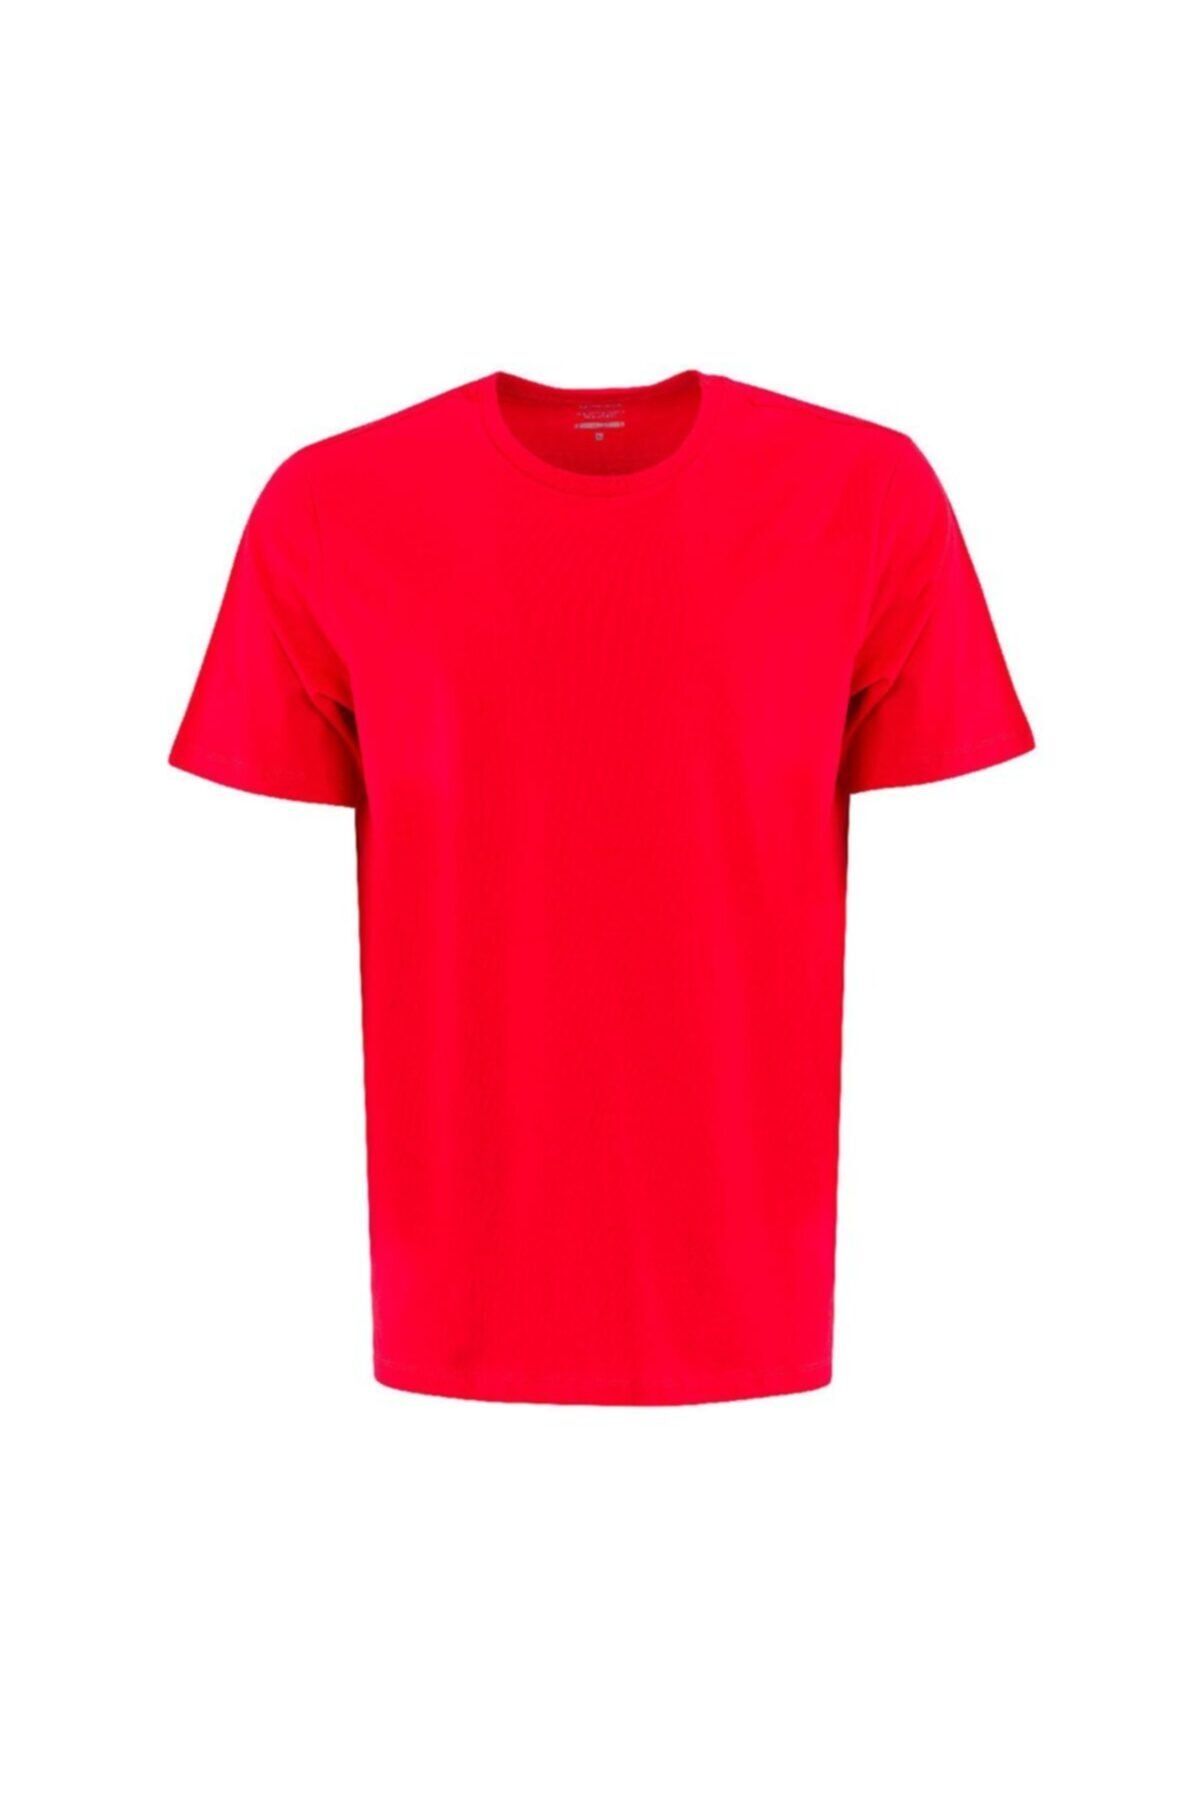 Lumberjack CT102 BASIC C NECK T-SHIR Kırmızı Erkek T-Shirt 100581710